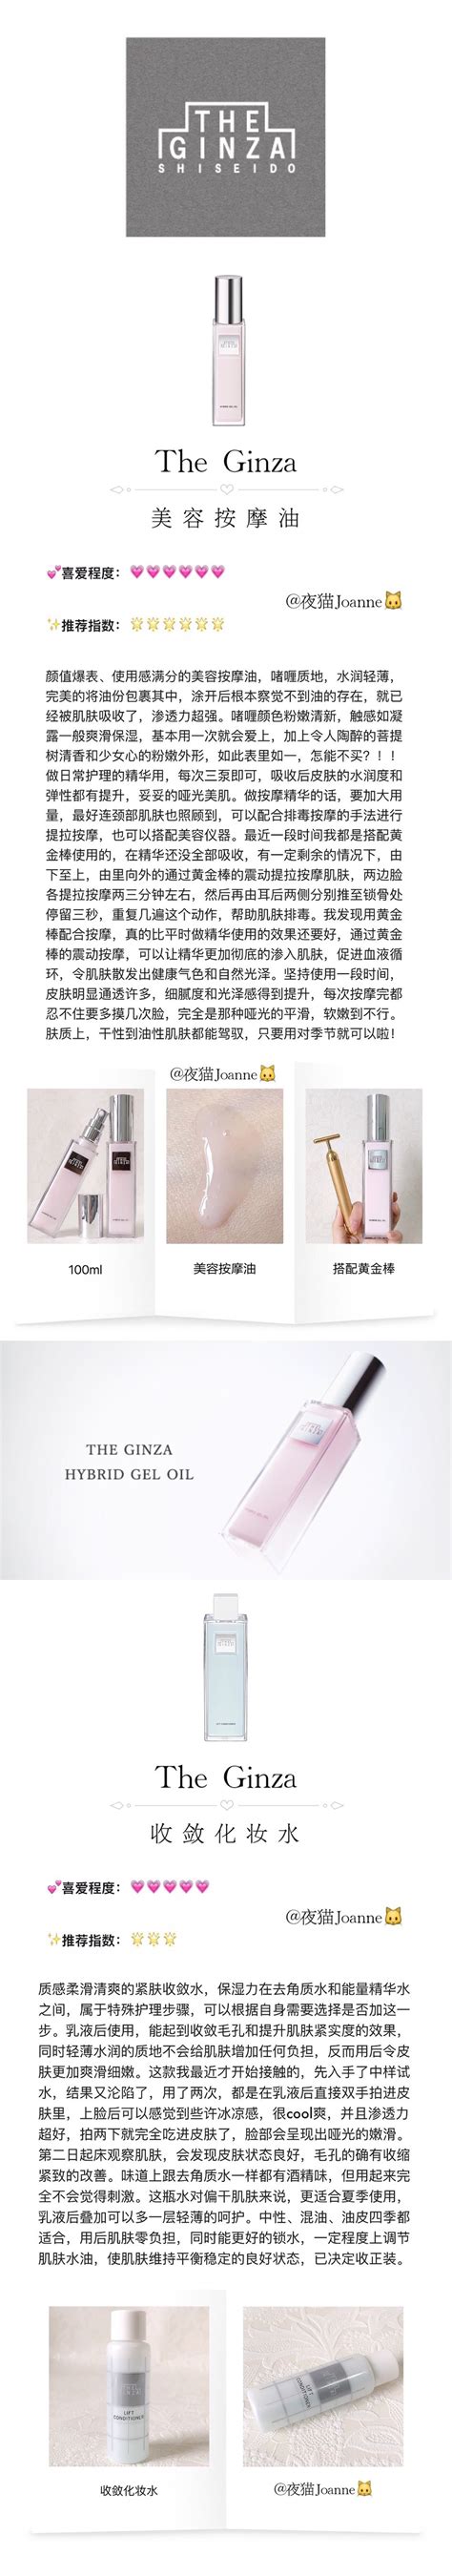 The Ginza 护肤品使用心得合集 - 美妆交流 - 可爱网 - 最有爱的时尚美妆社区 | 美容·化妆·护肤·交流